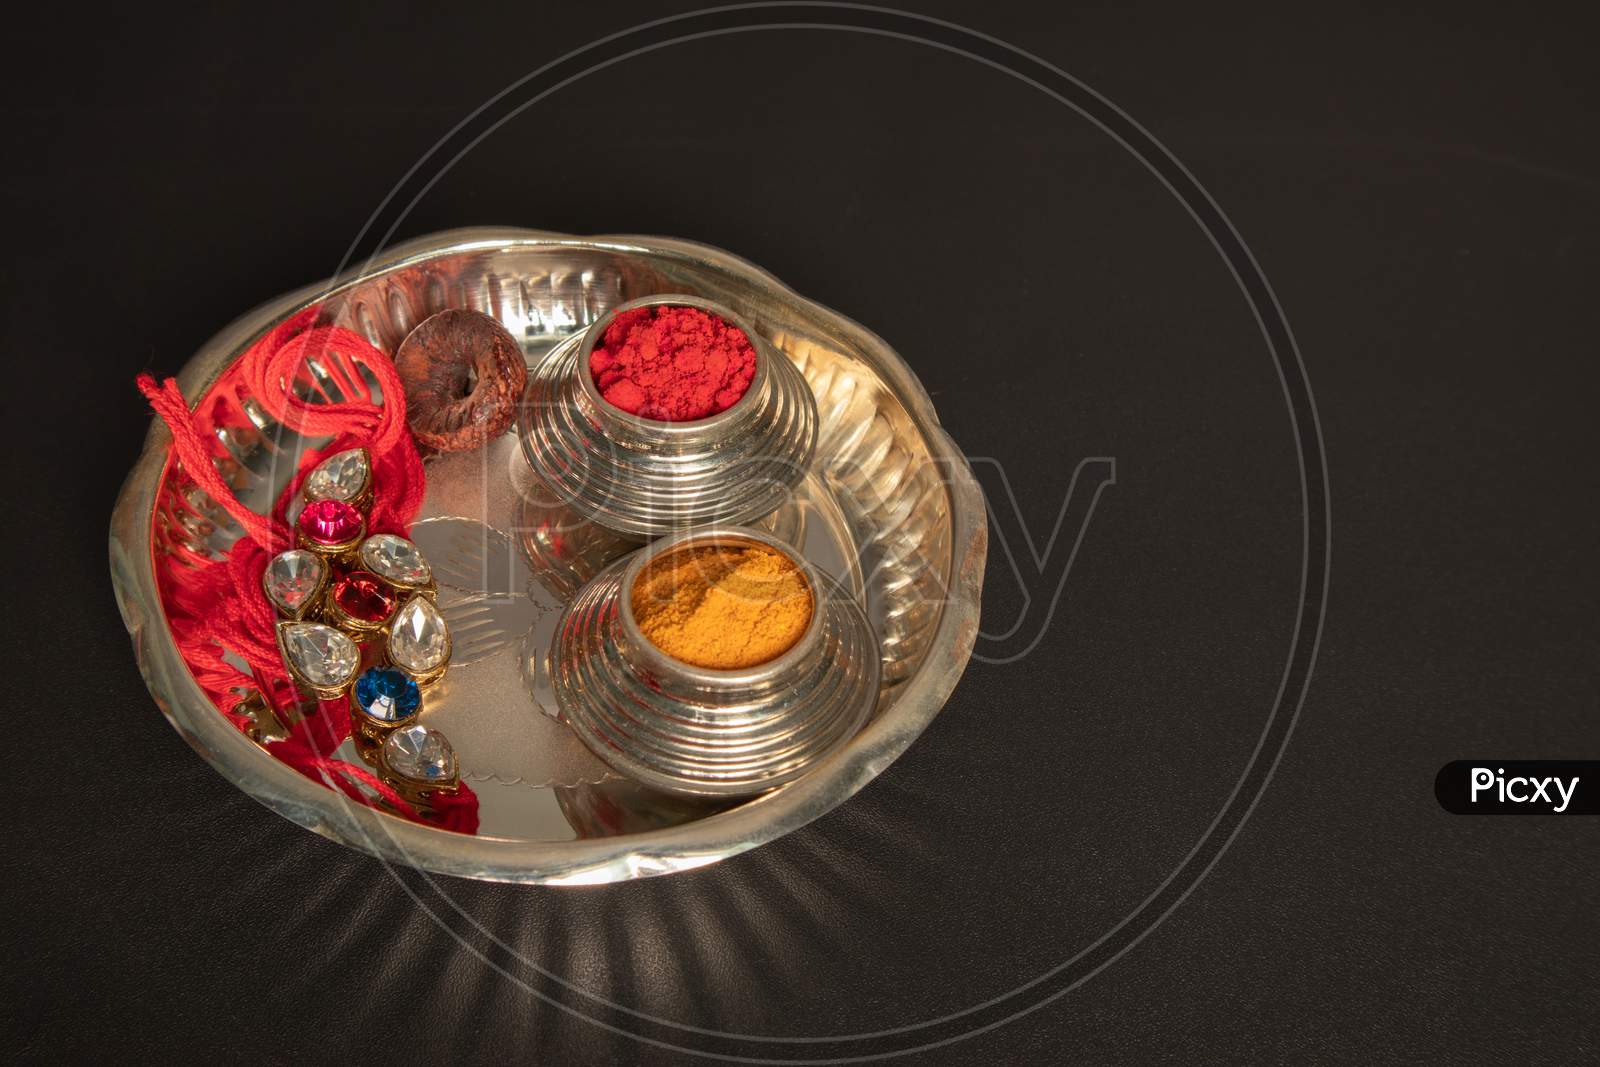 Raksha Bandhan Raakhi Or Rakhi With Pooja Plate A Traditional Hindu Festival Or Ceremony On Black Background,